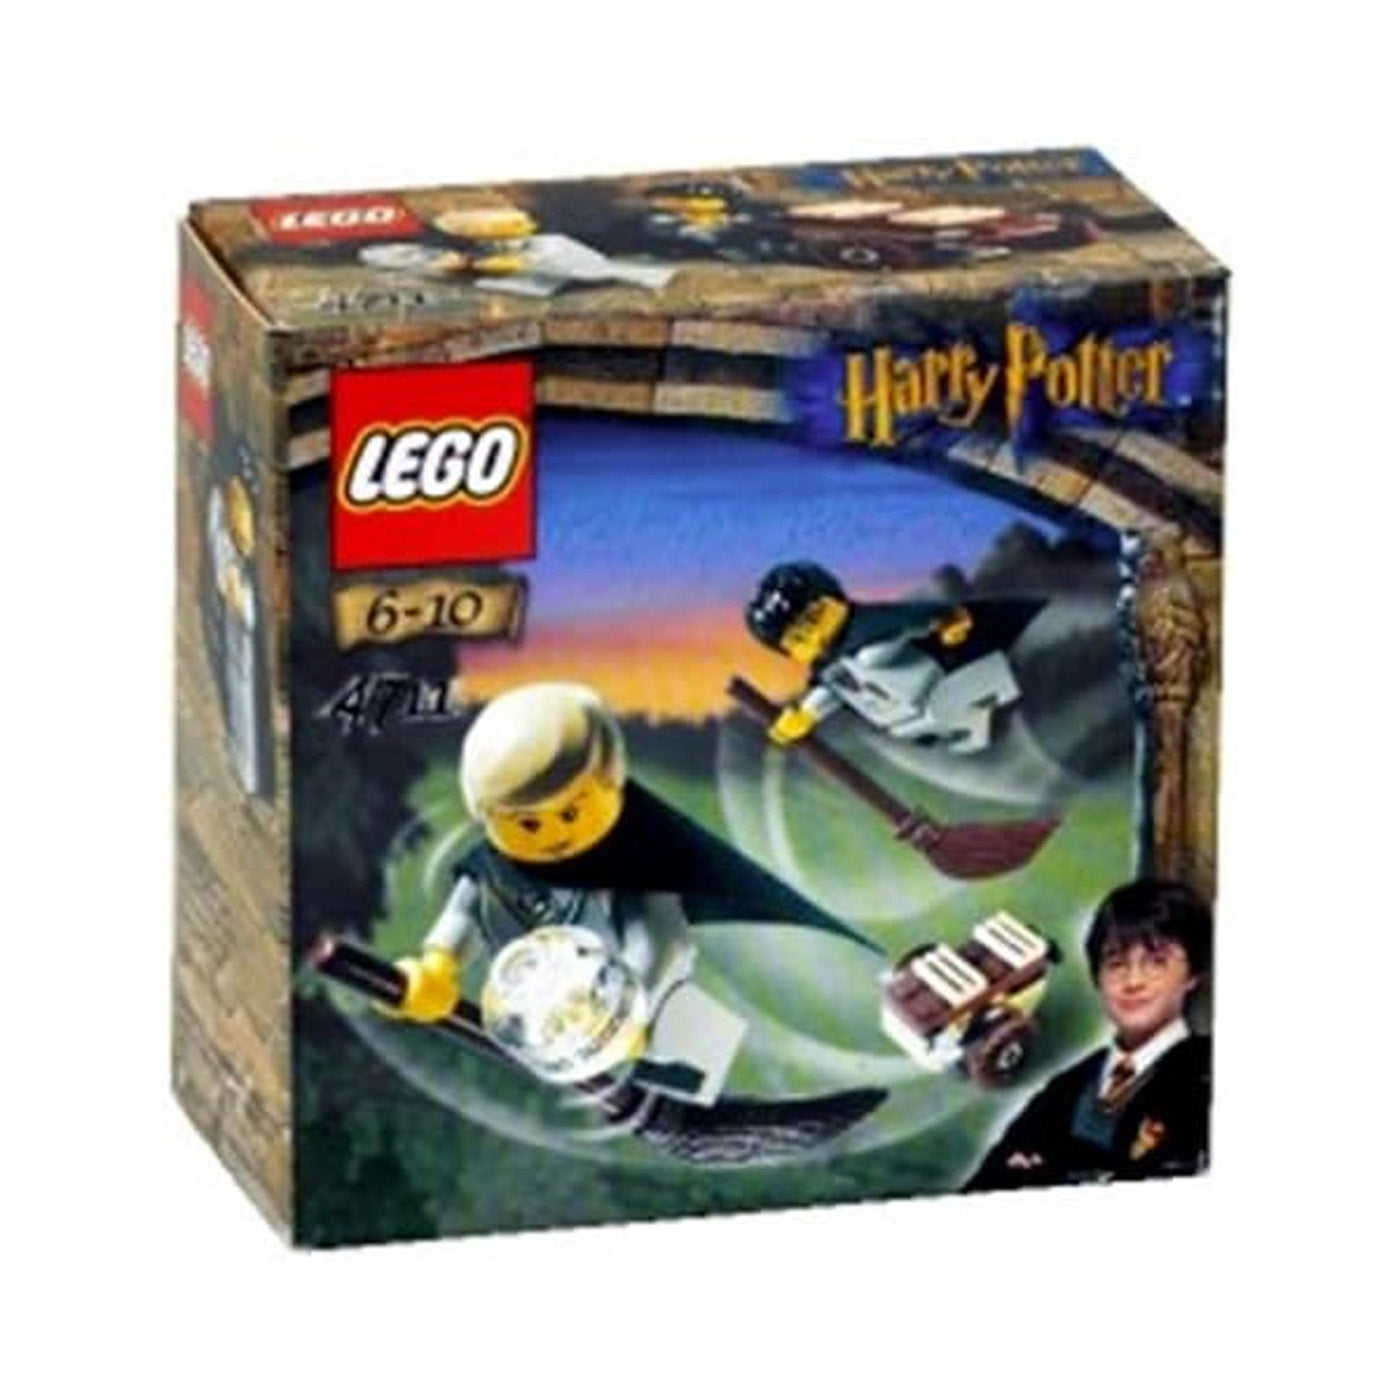 LEGO Harry Potter: Flying Lesson Set 4711